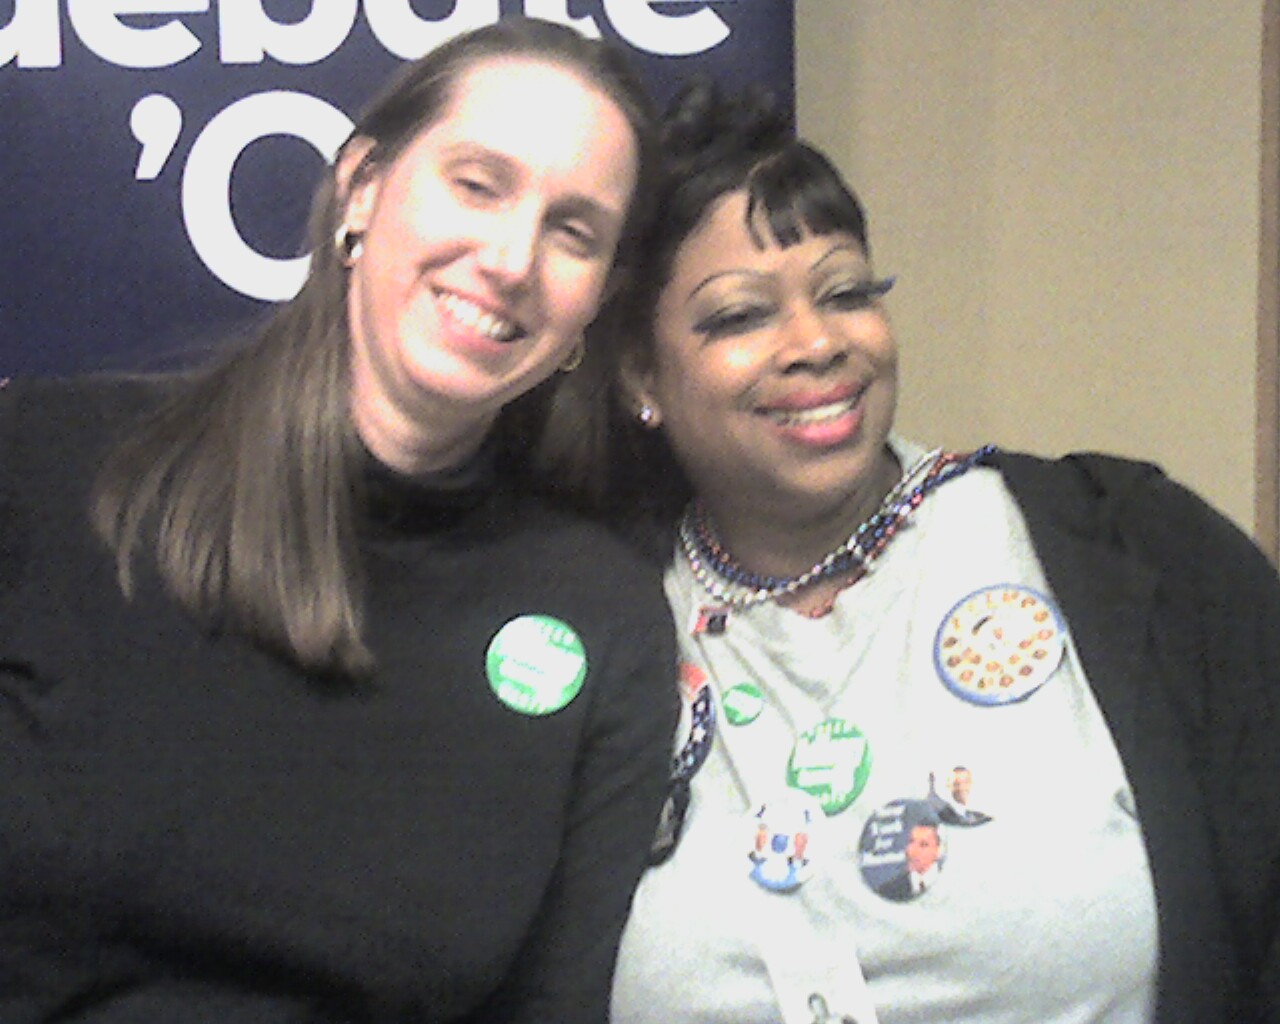 Kimberly and Anita. Found a friend to wear a Cynthia button